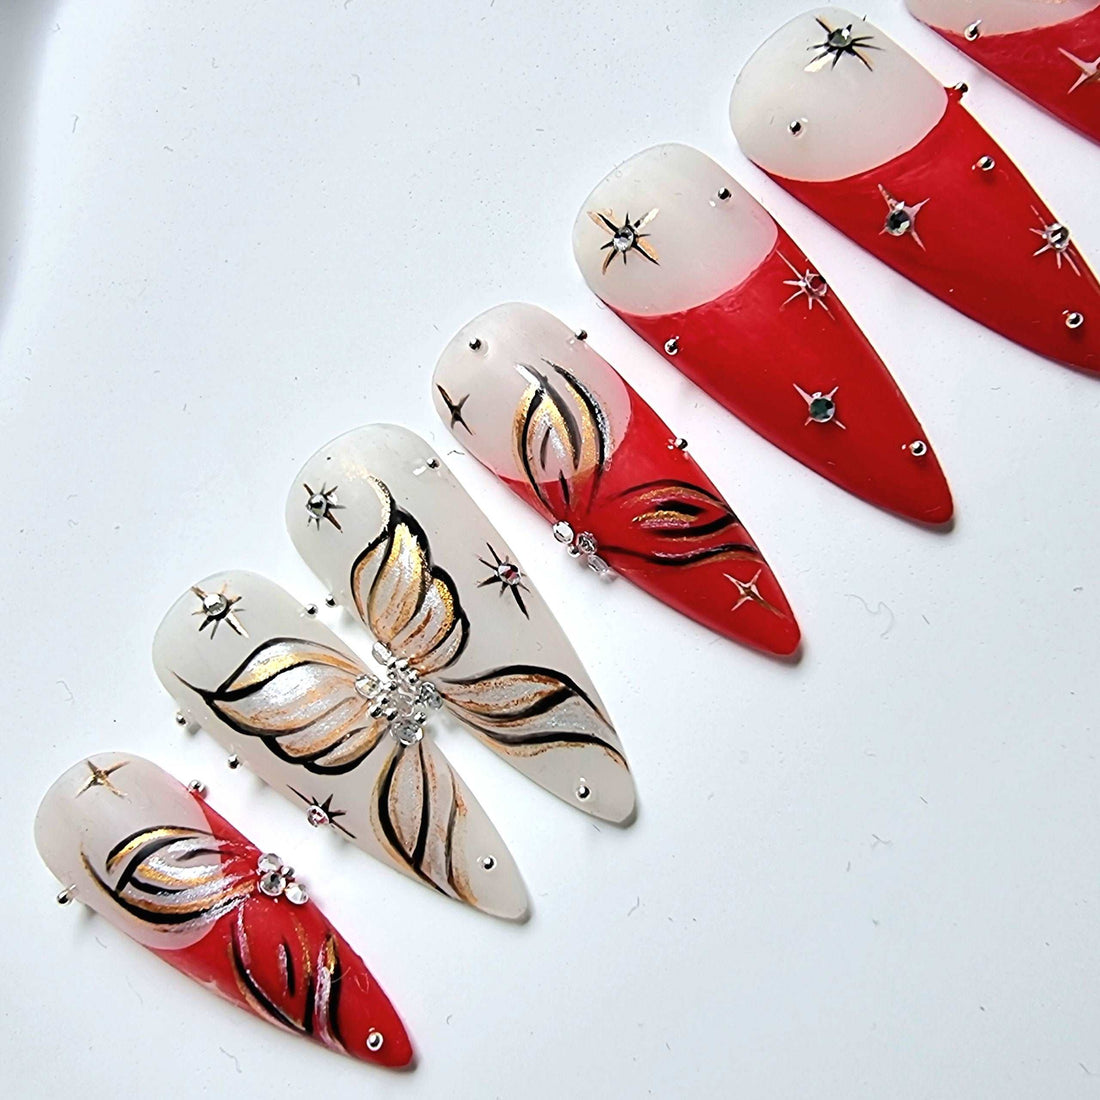 Handmade Butterfly Press on Nails - Red Elegant Spring Star & Crystal Design.